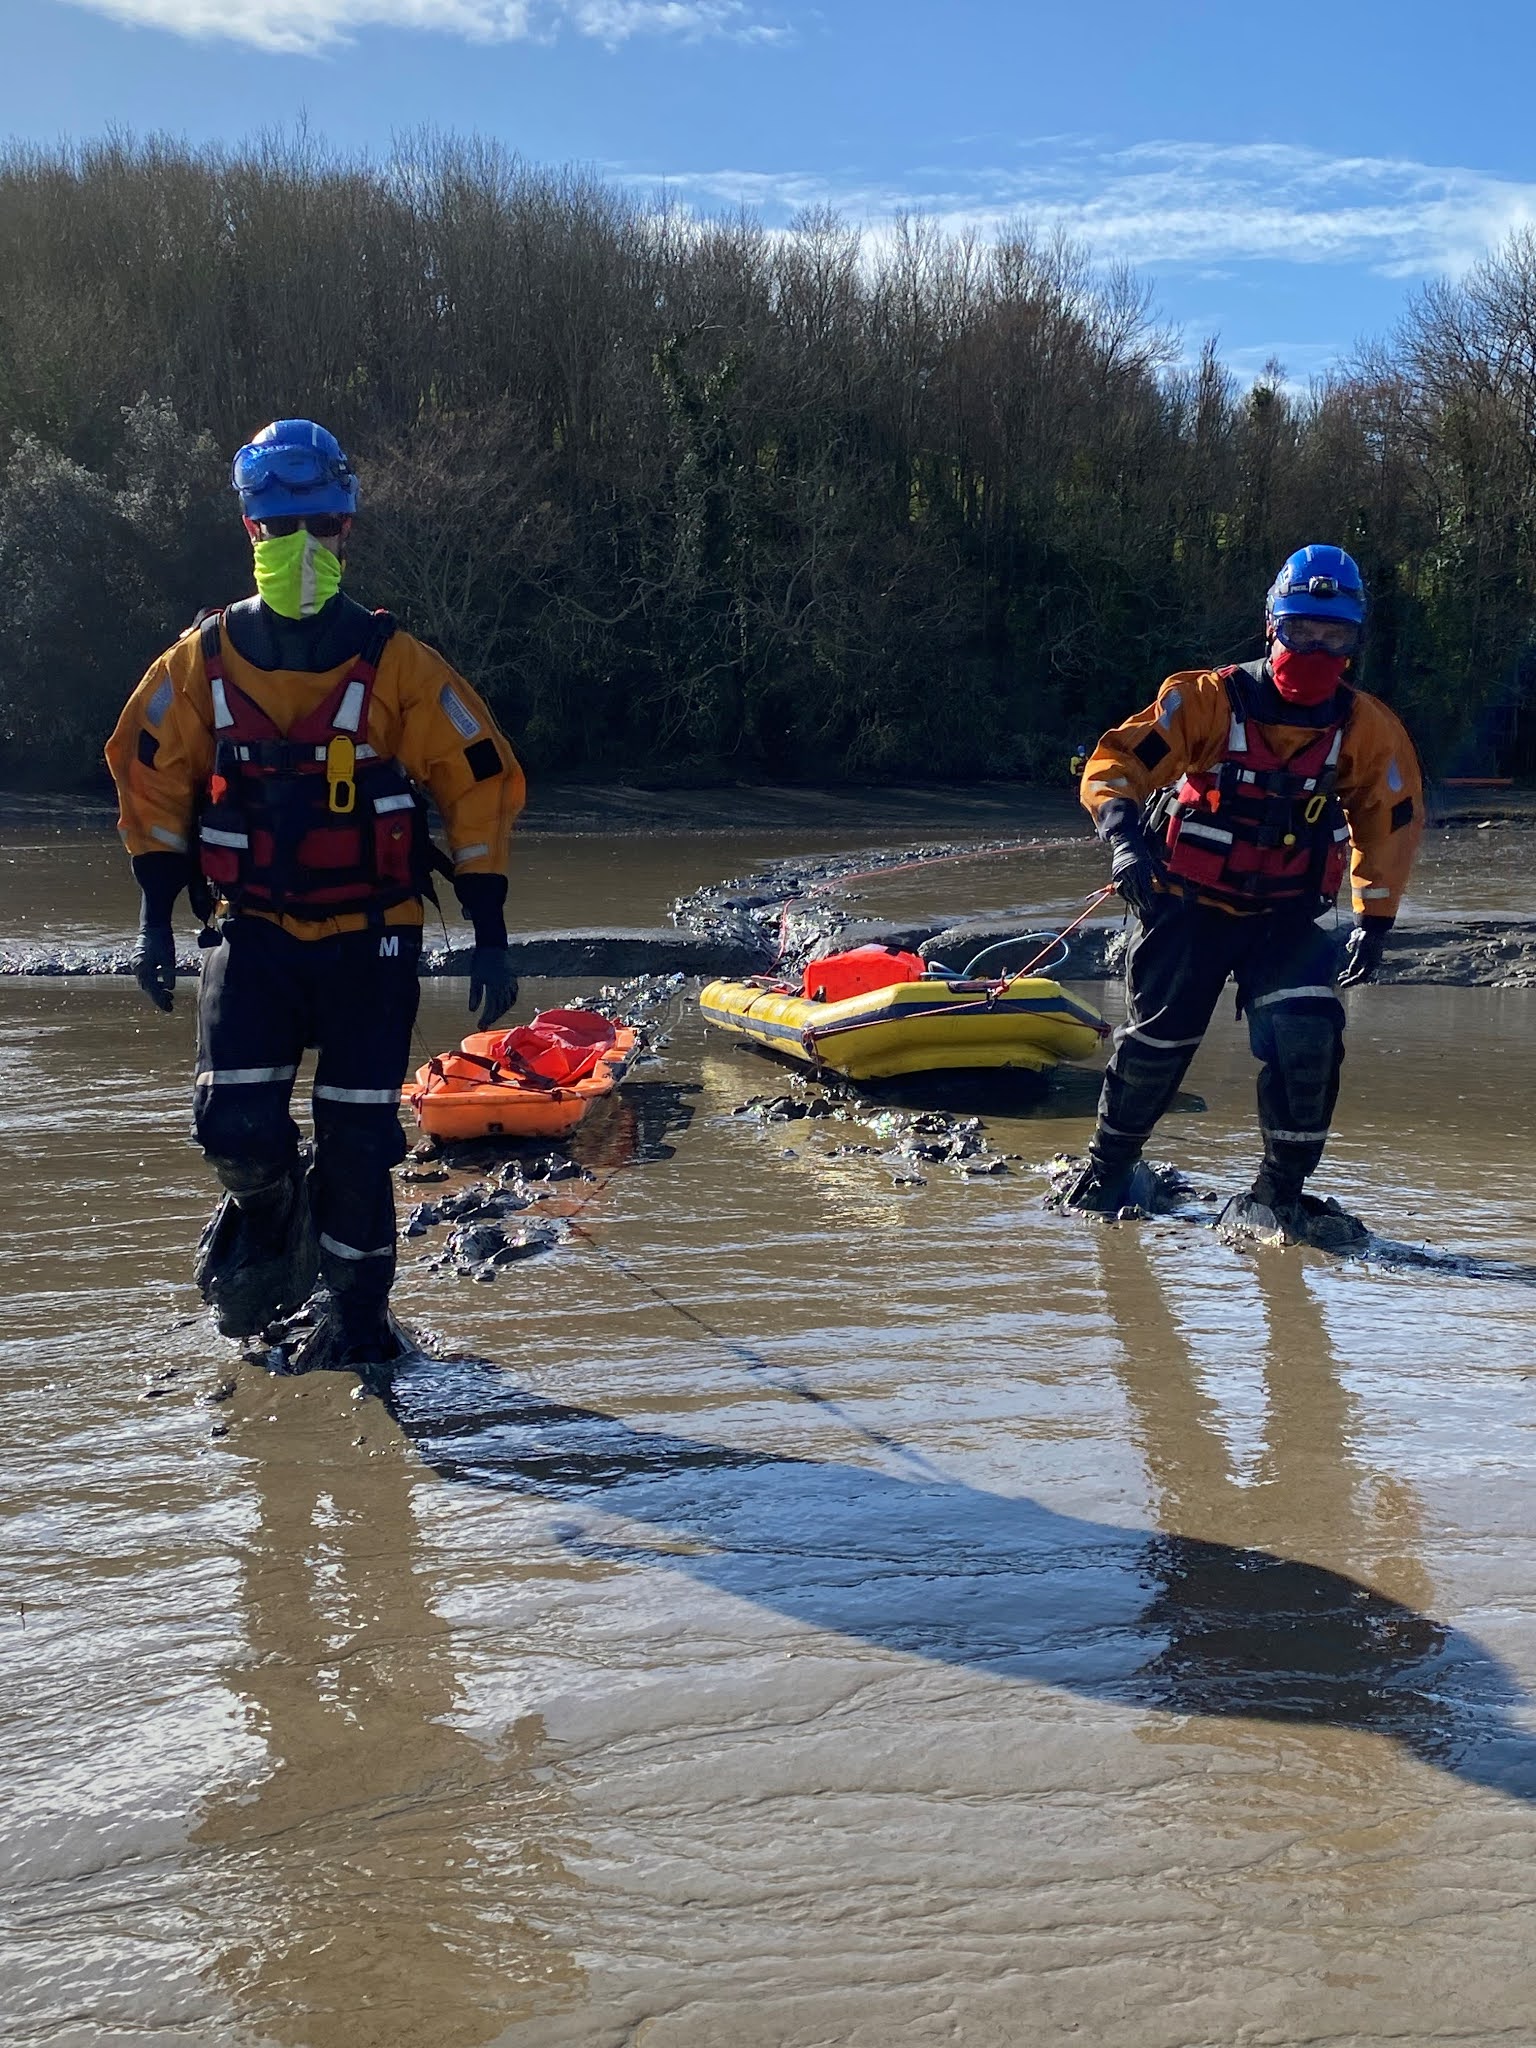 Mud rescue training image credit Drew Parkinson